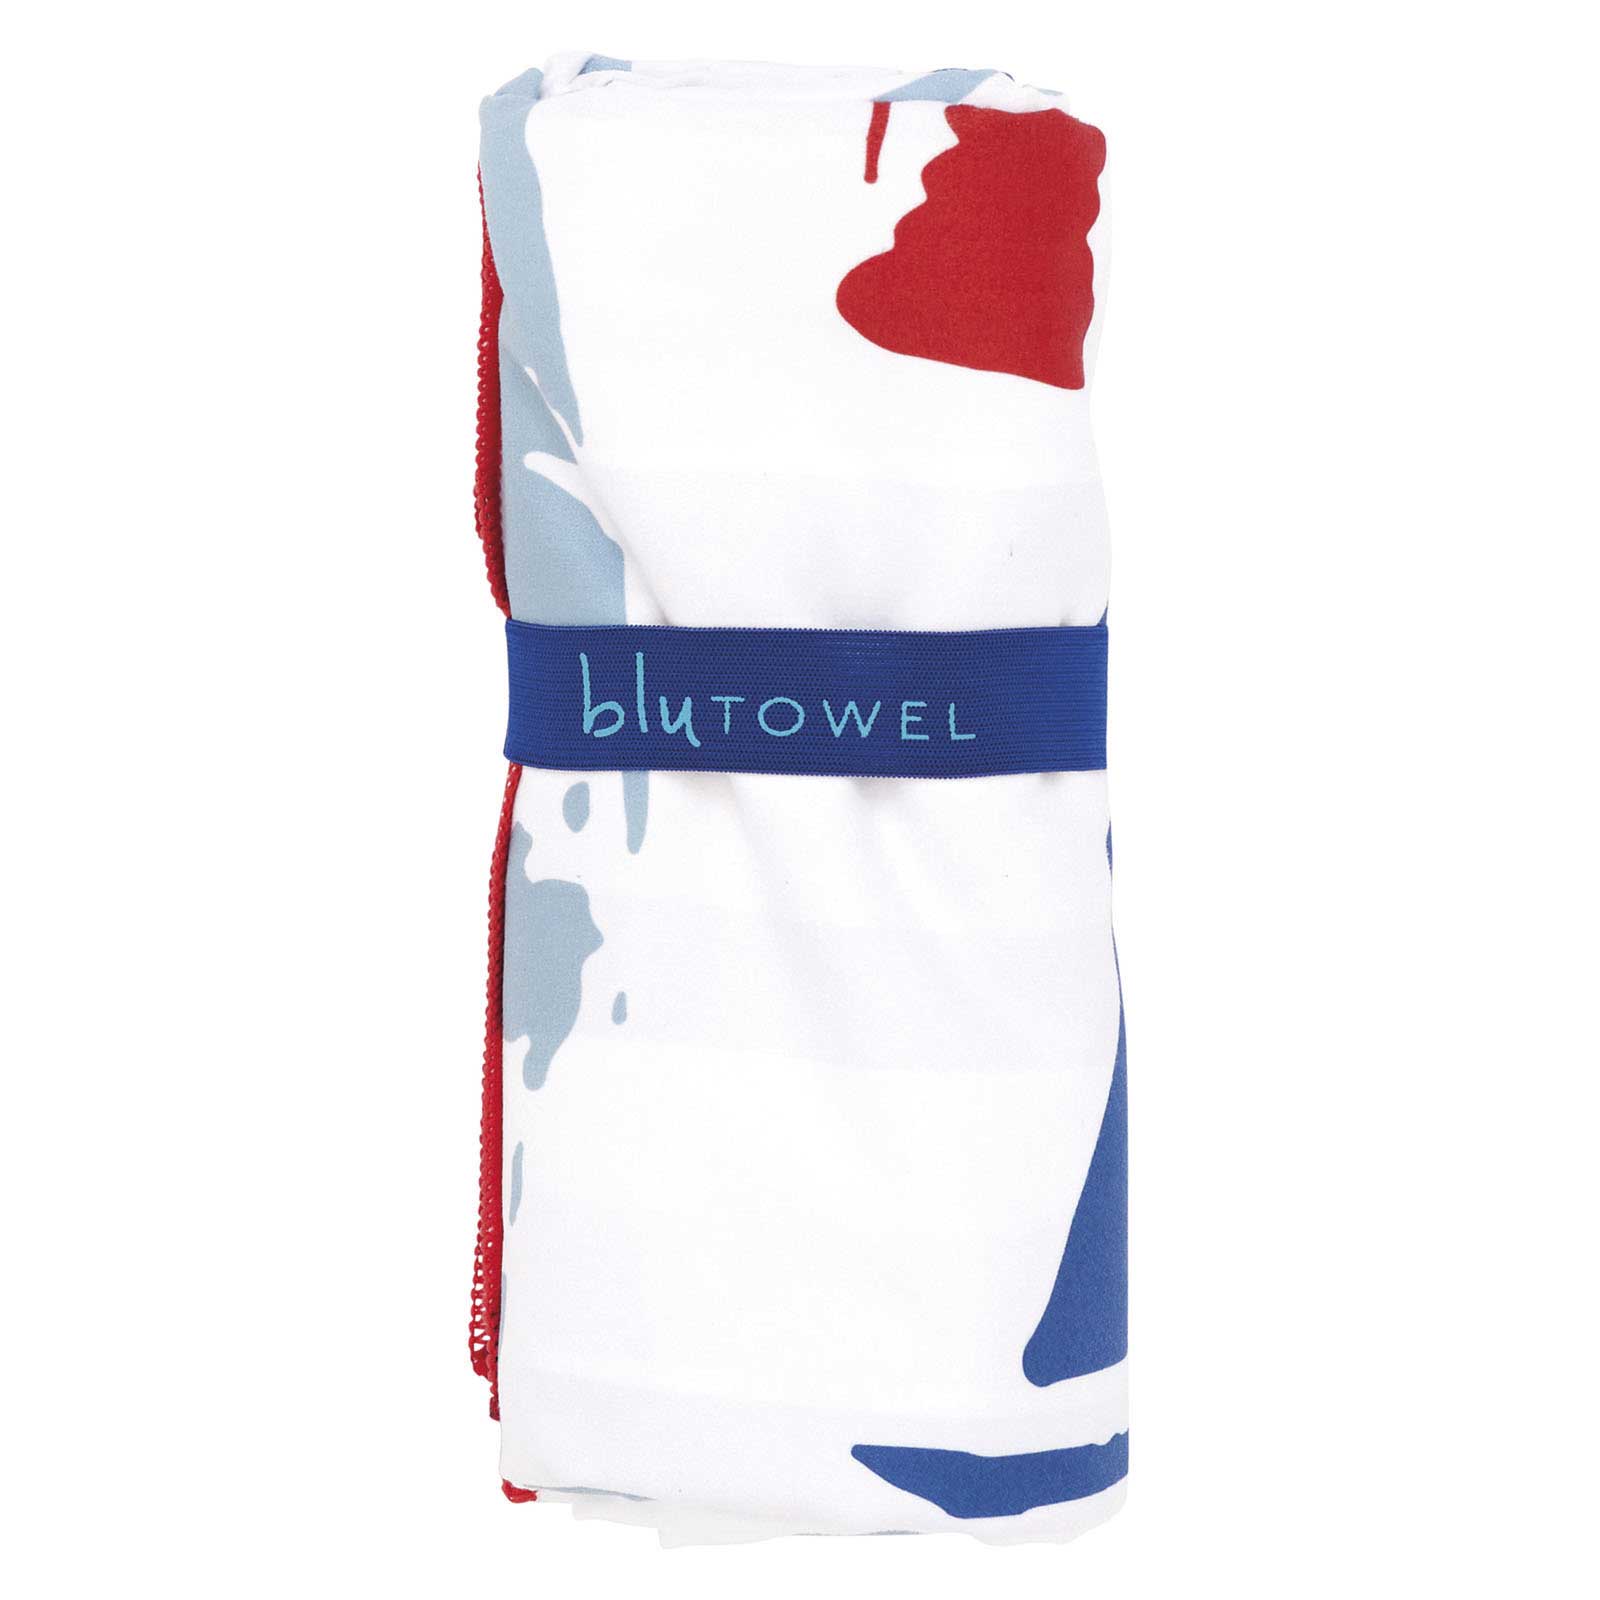 The Cape Reversible Eco Beach Towel Beach Towel - rockflowerpaper